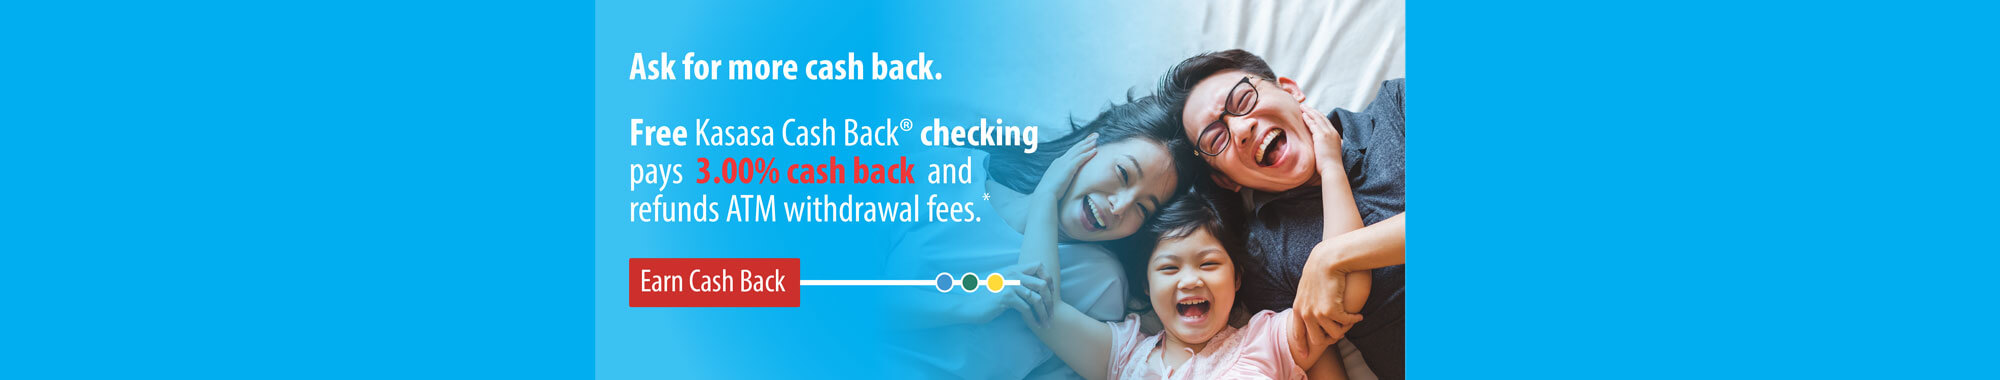 Ask for free Kasasa Cash Back checking!